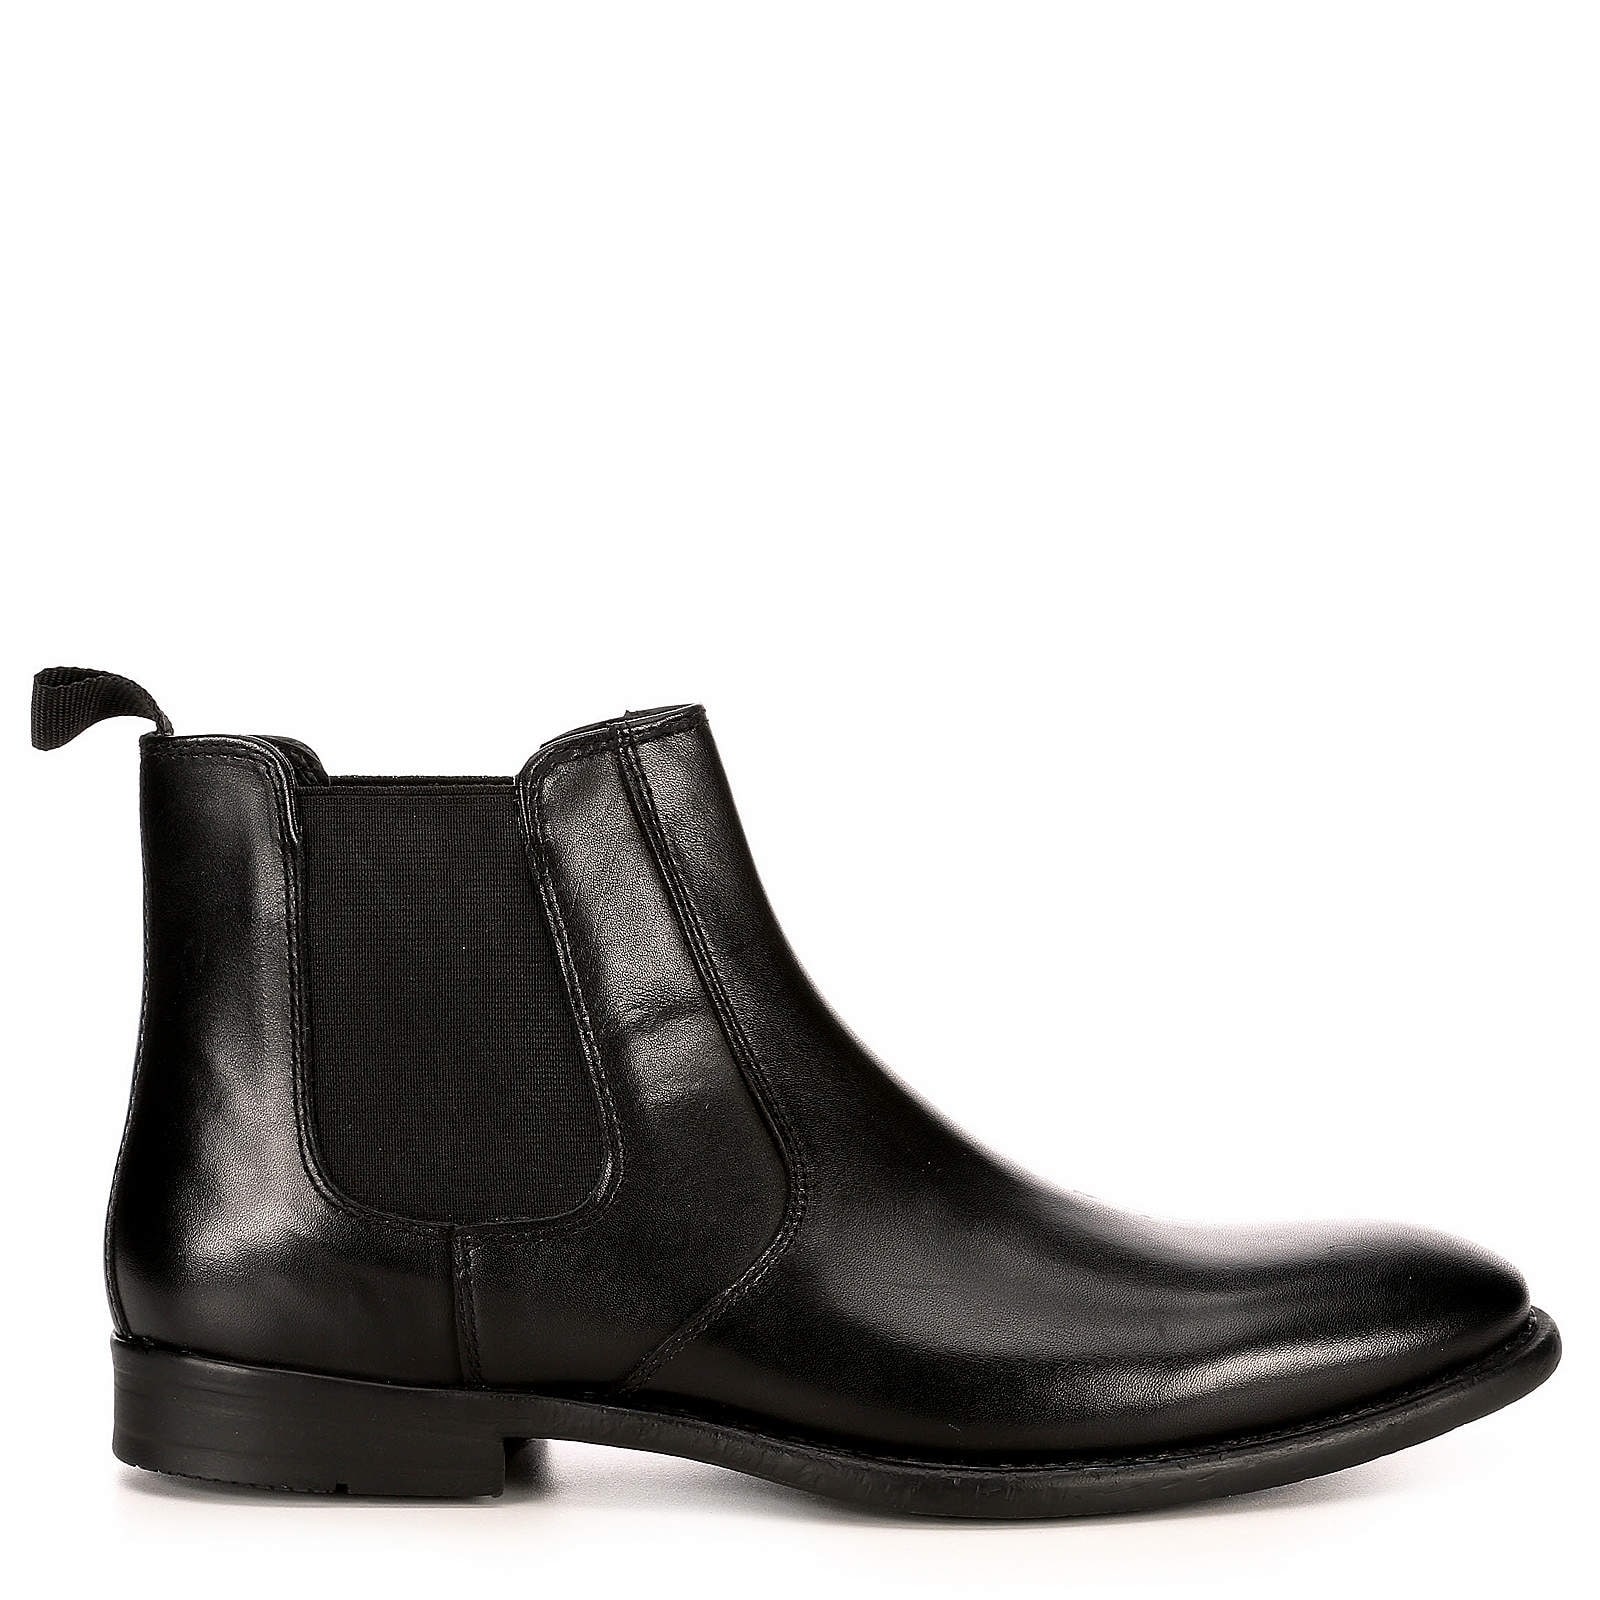 mens black leather chelsea boots sale